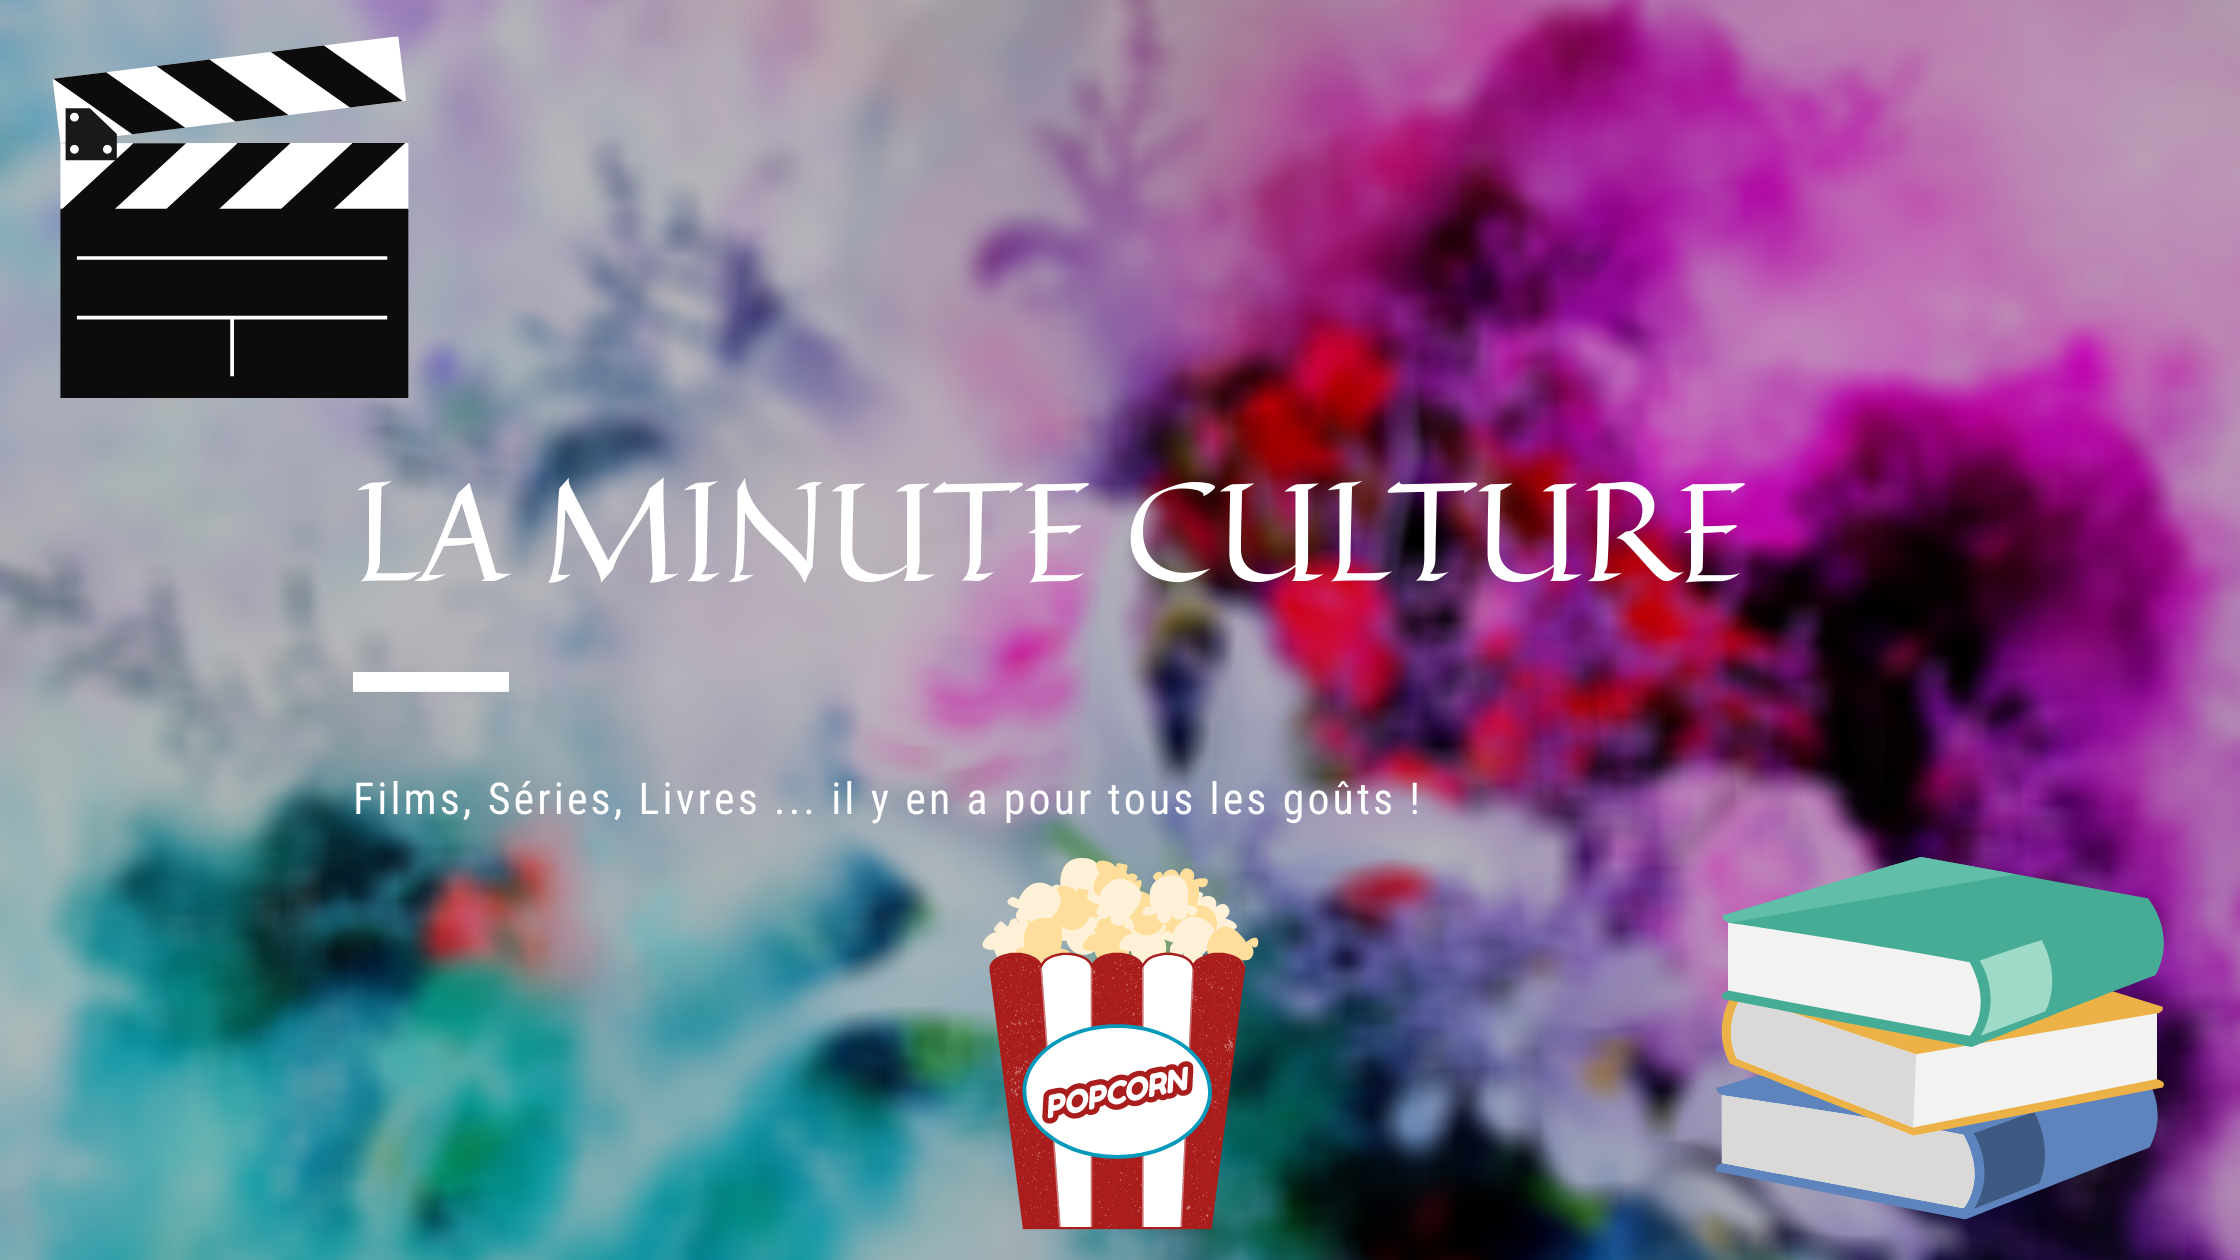 La minute culture - épisode 12